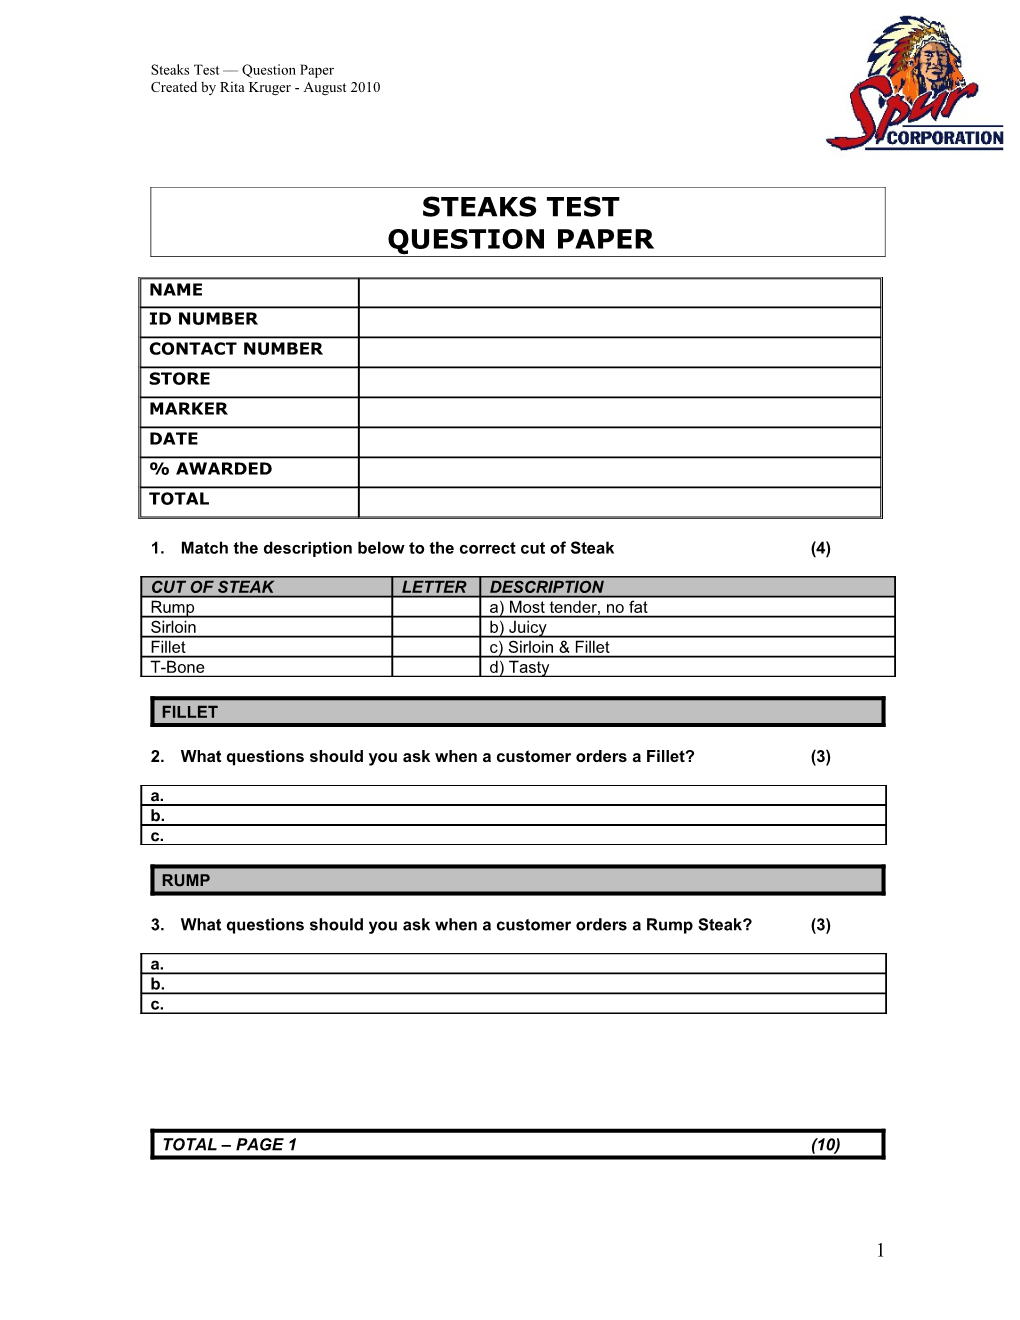 Steaks Test Question Paper